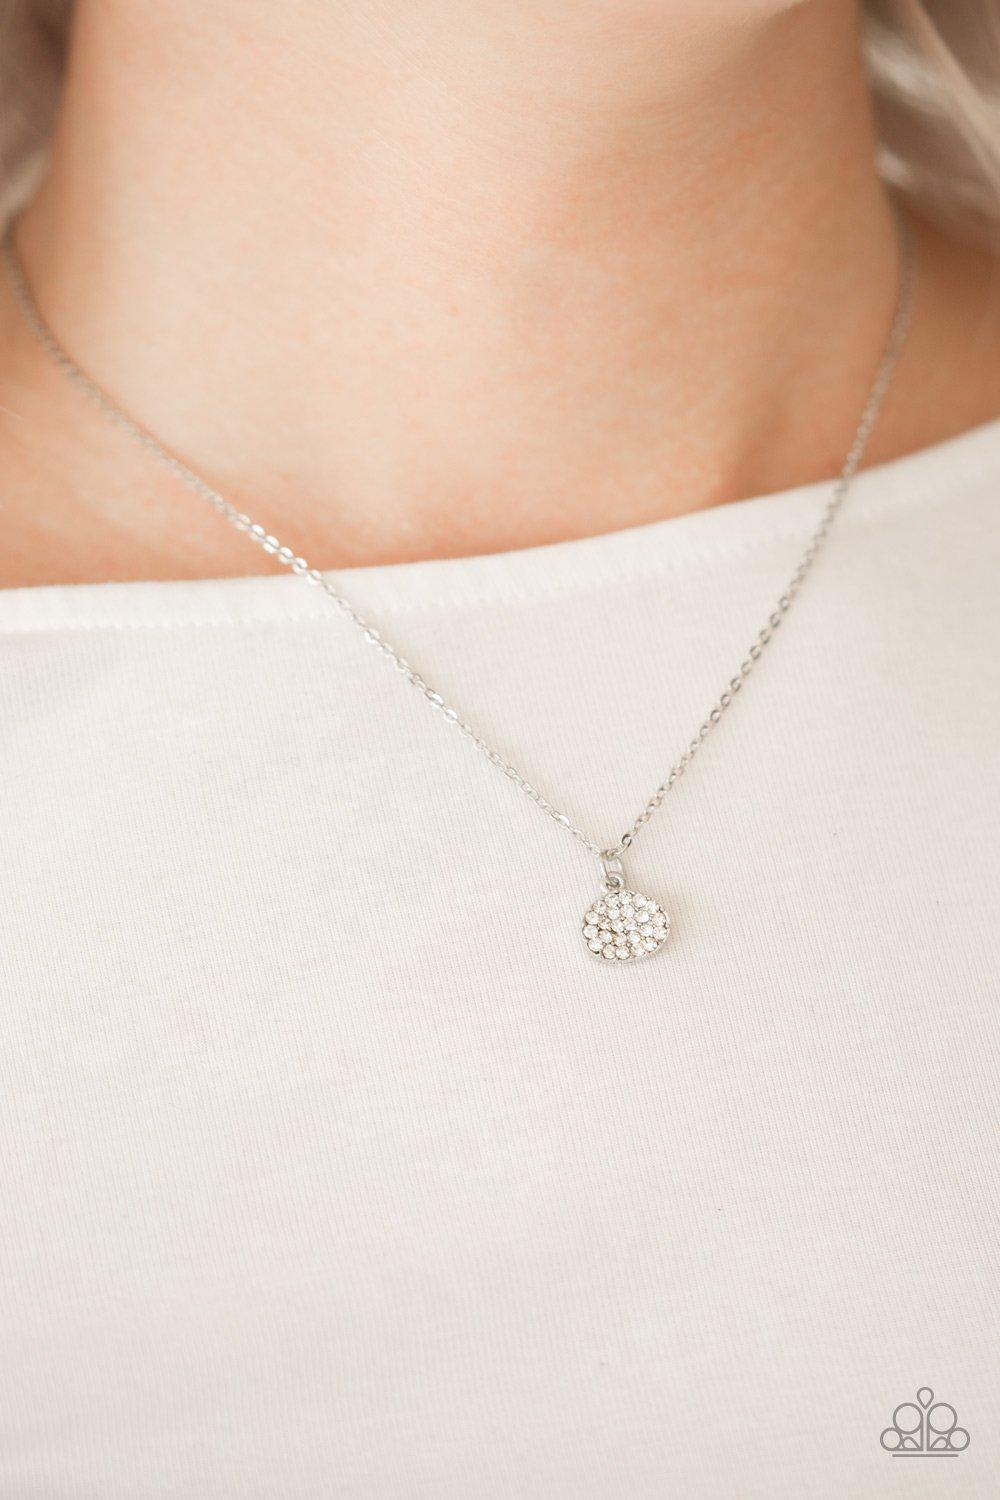 Diamond Debonair Silver and White Rhinestone Necklace - Paparazzi Accessories-CarasShop.com - $5 Jewelry by Cara Jewels